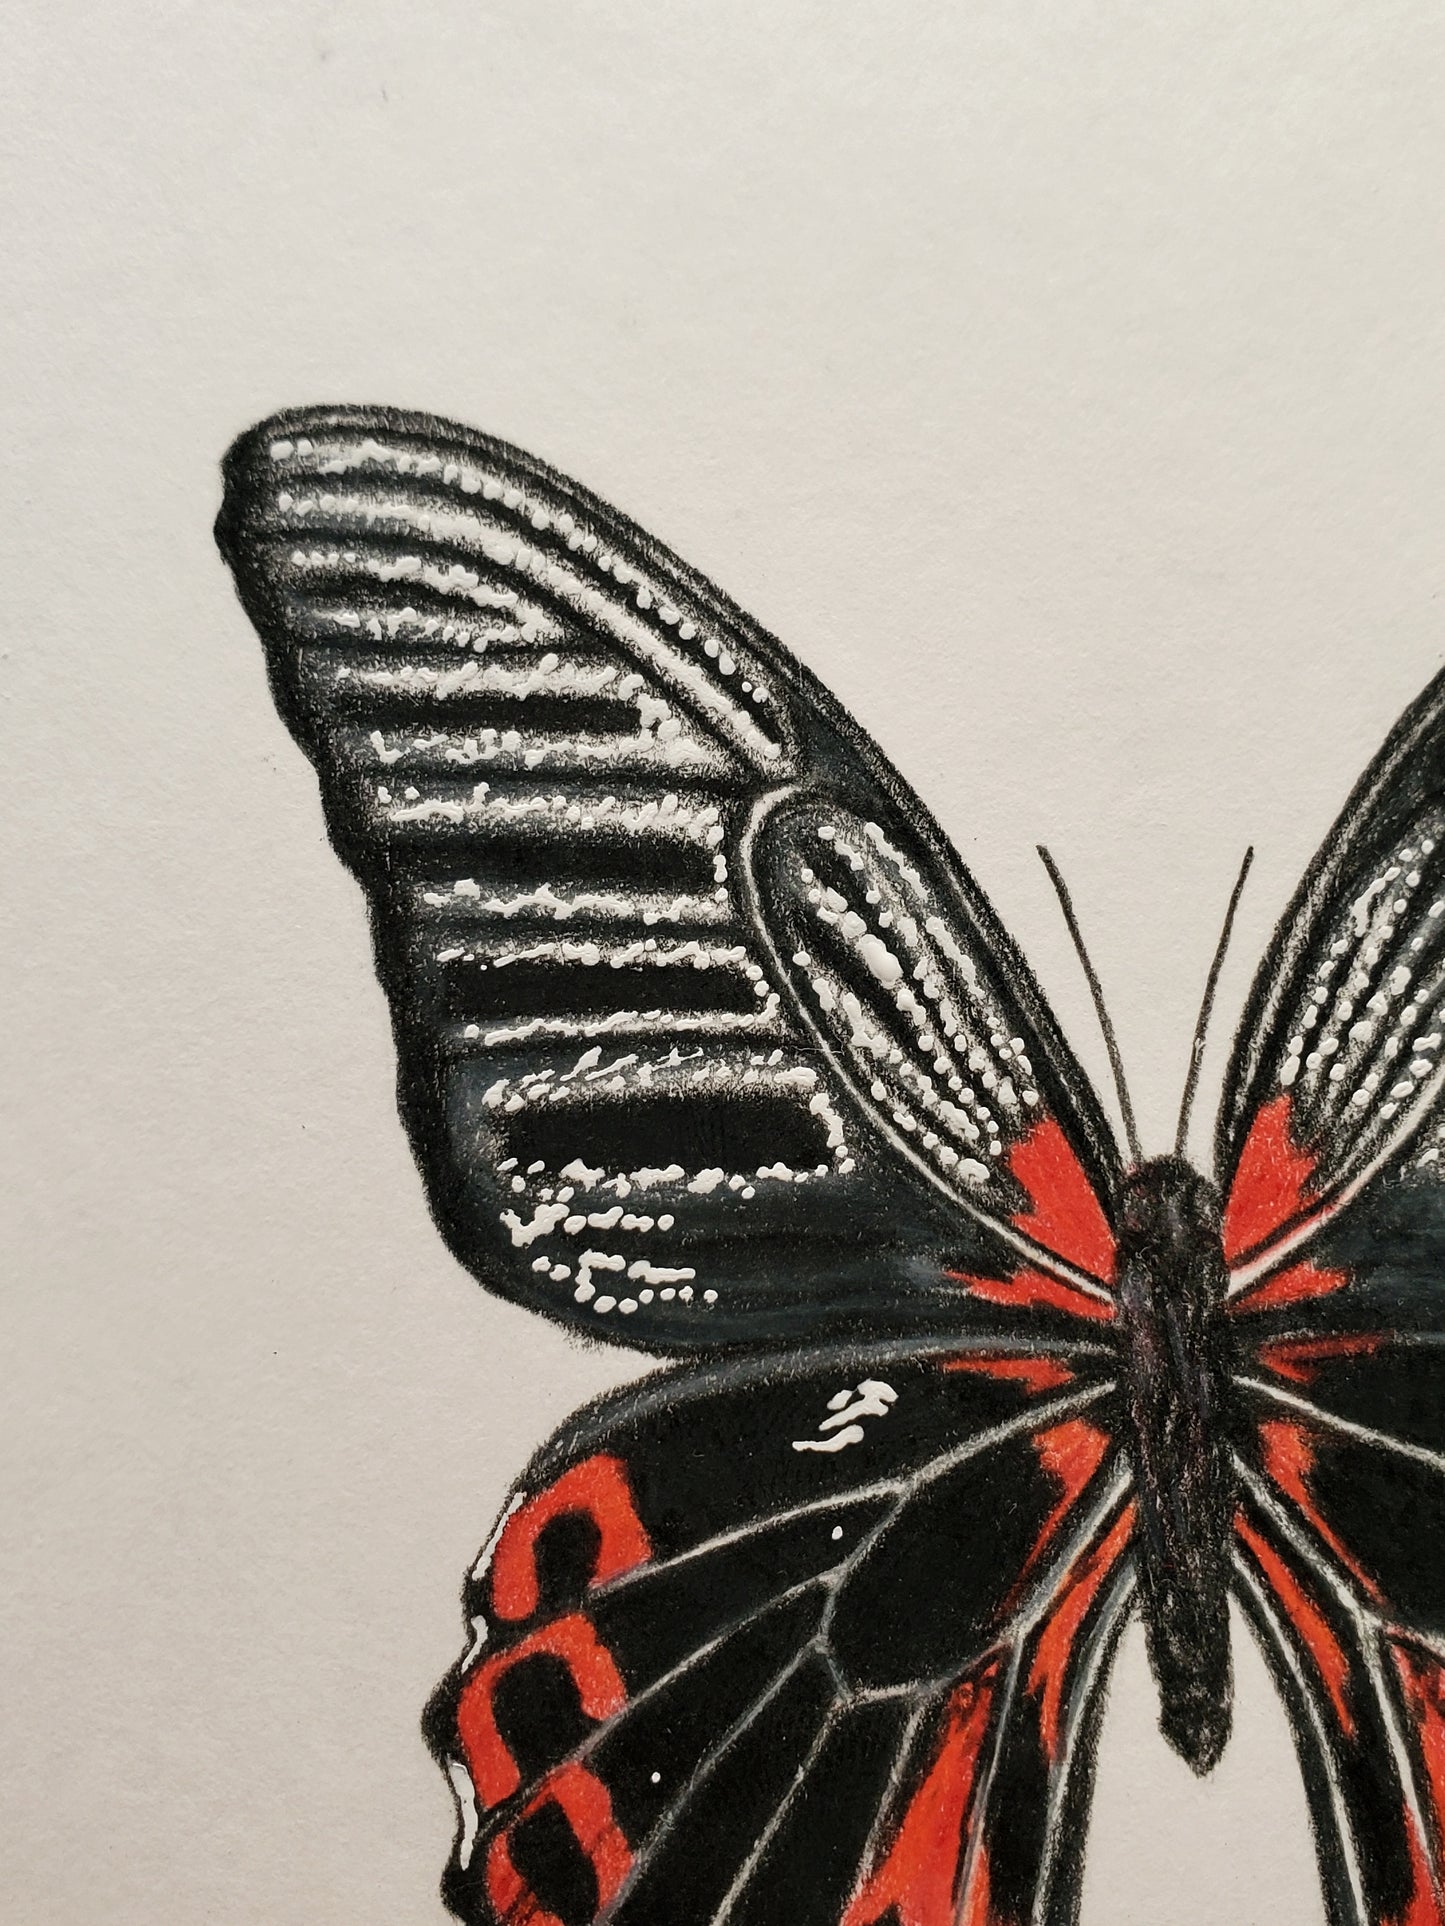 Black Widow & Butterfly Drawing in Ceramic Frame